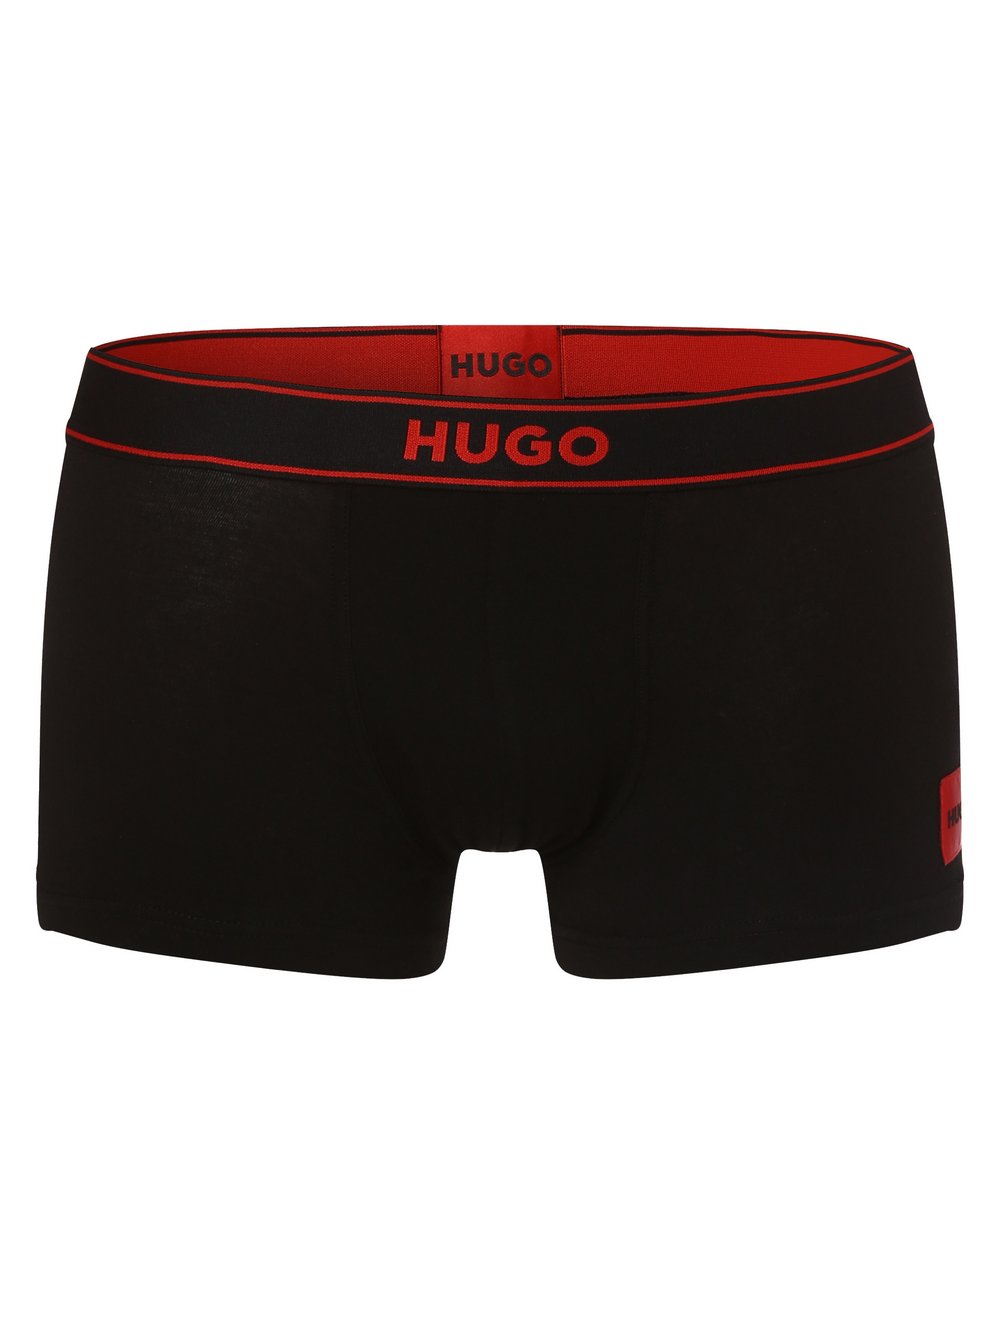 HUGO - Obcisłe bokserki męskie, czarny